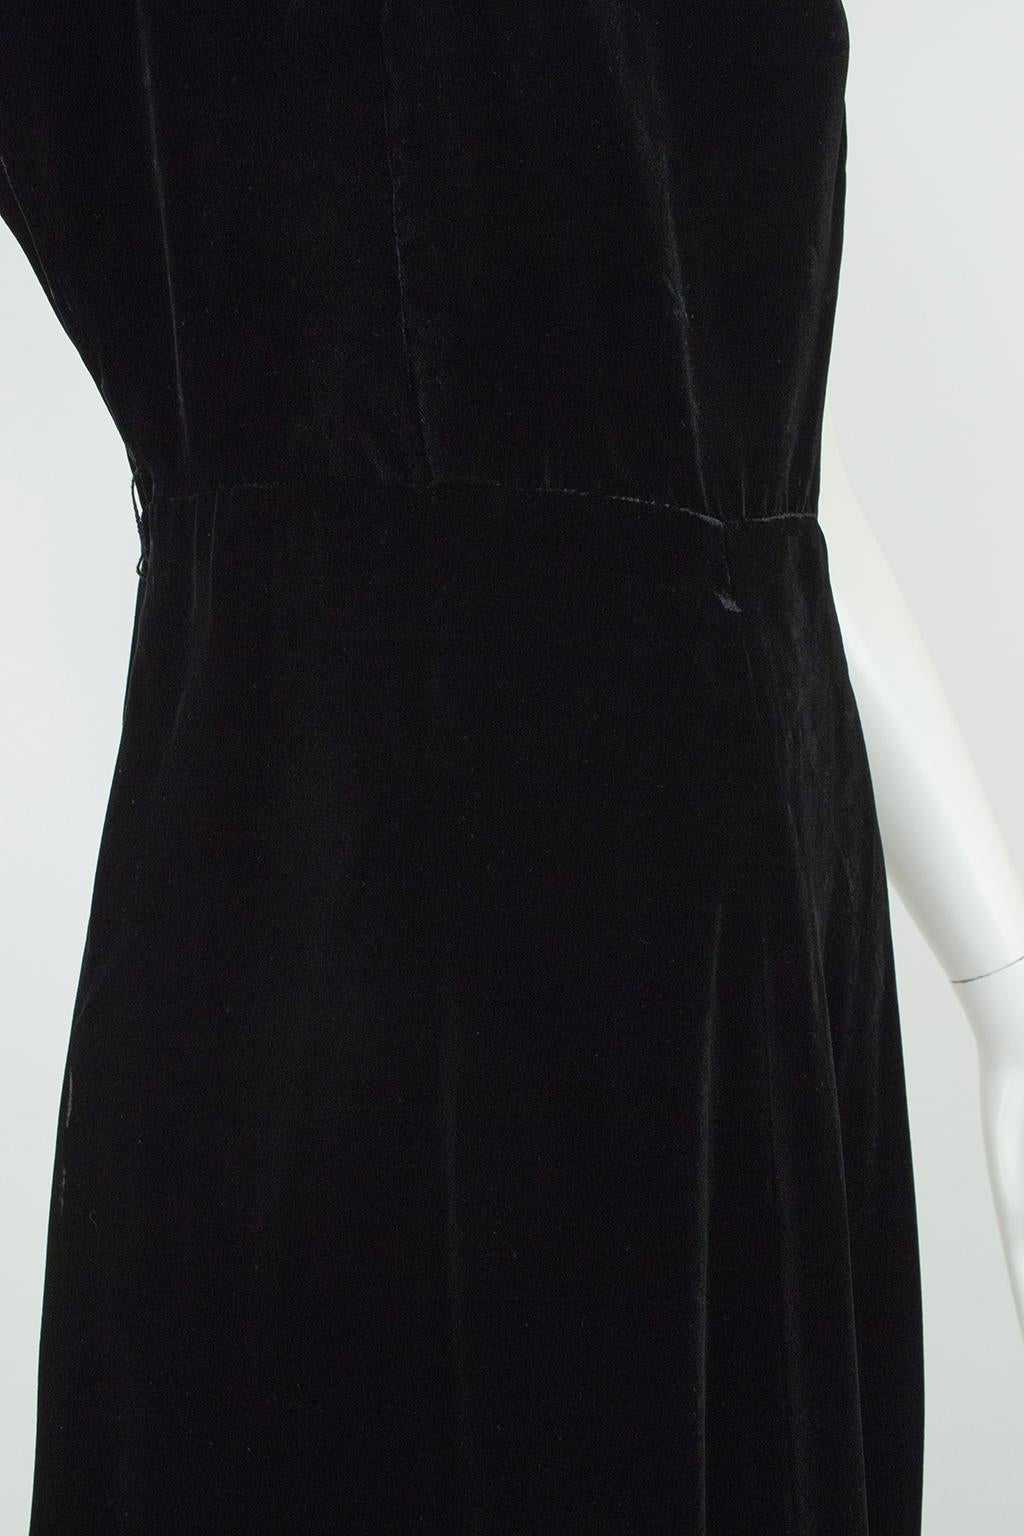 Pre-War Black Velvet Art Deco Bead and Rhinestone Cocktail Dress – L, 1940s For Sale 4